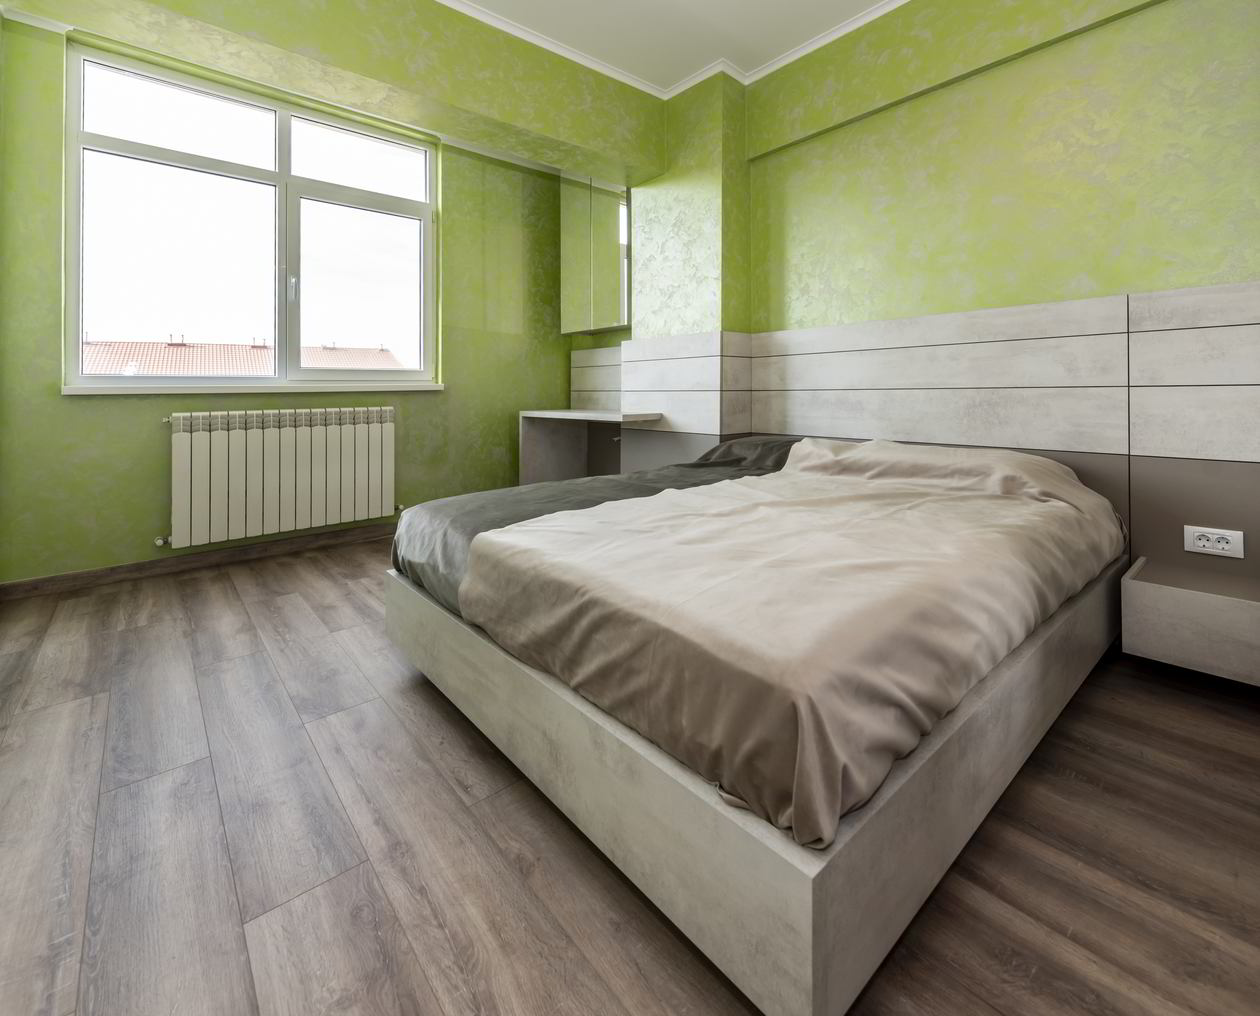 Apartament cu 4 camere, locuinta privata in Constanta, Mobilat integral, 14 Mai 2021 COD.12992